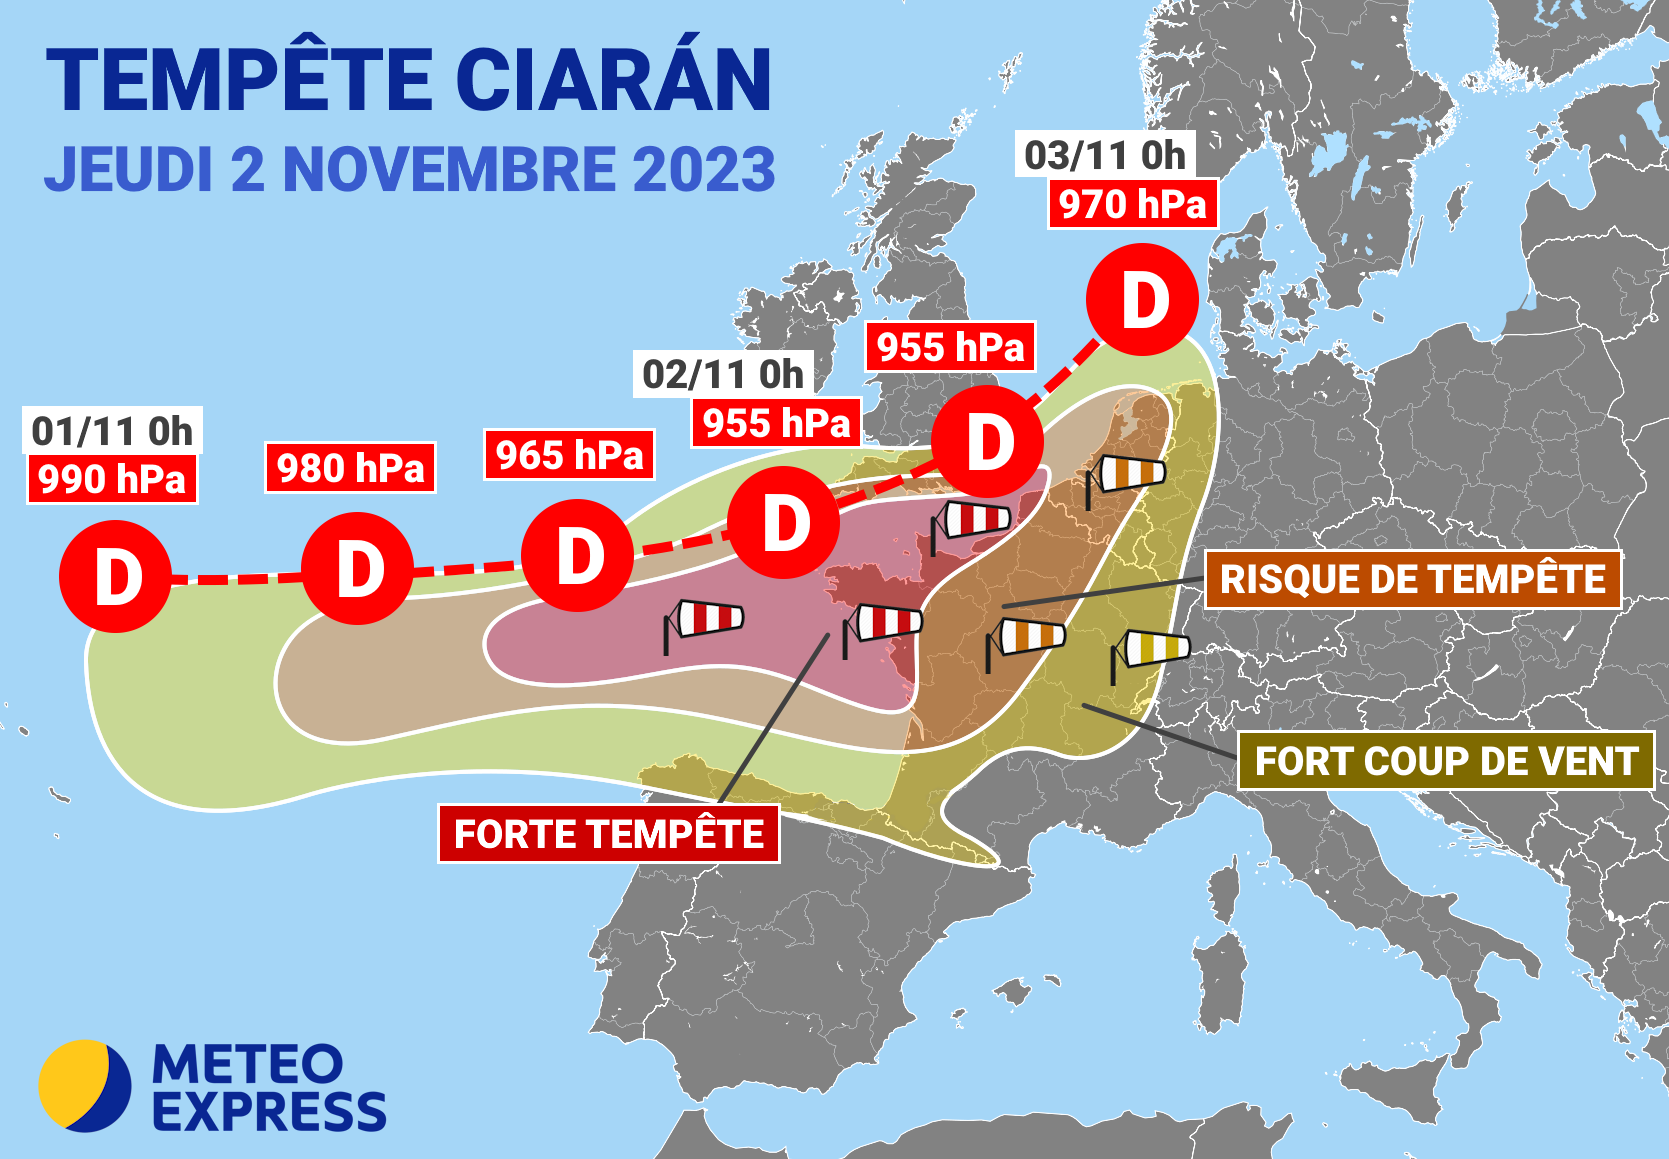 Trajectoire de la tempête Ciarán, touchant la France le jeudi 2 novembre 2023